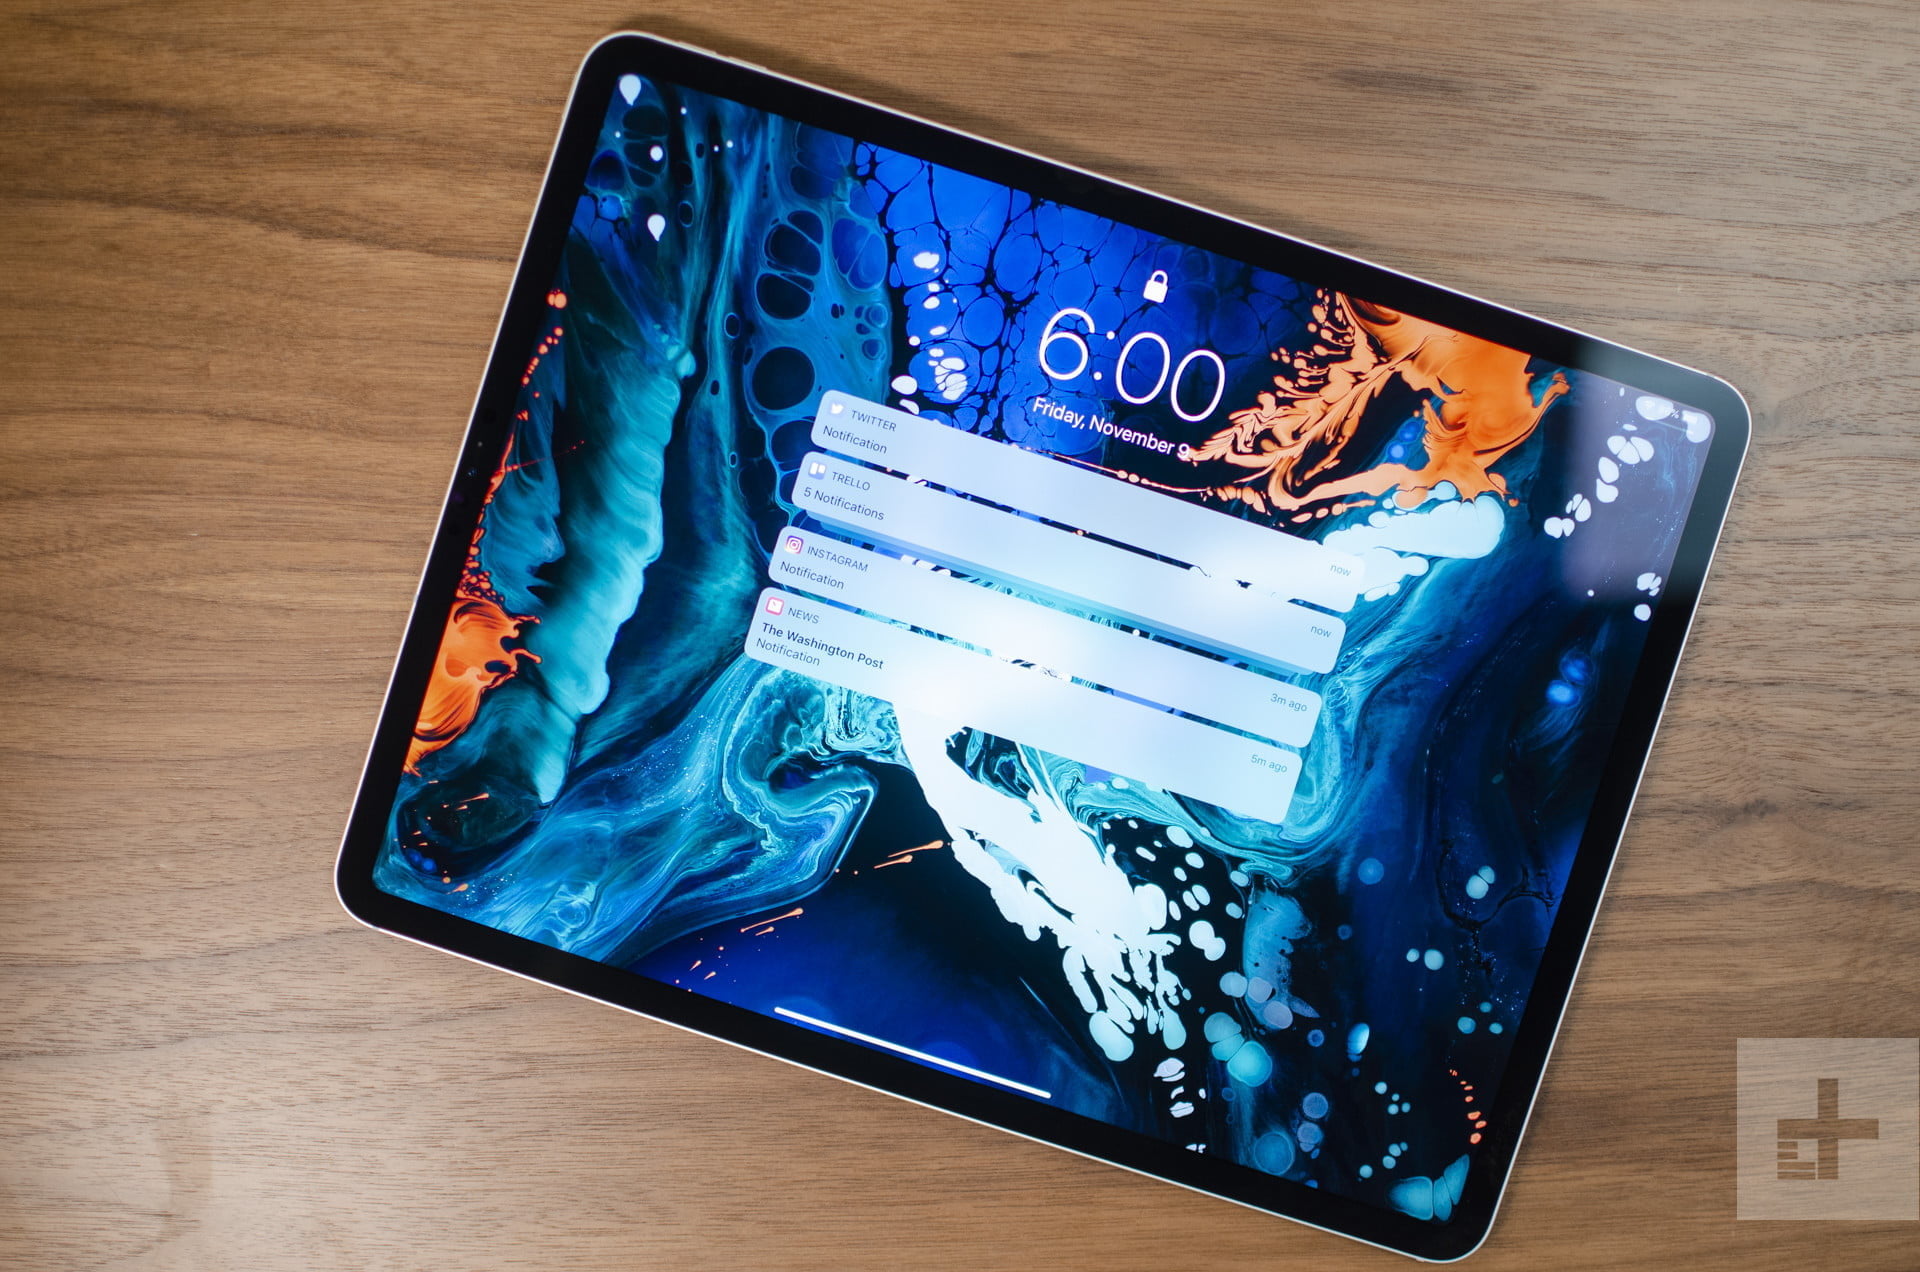 iPad Pro 2018 on a table.